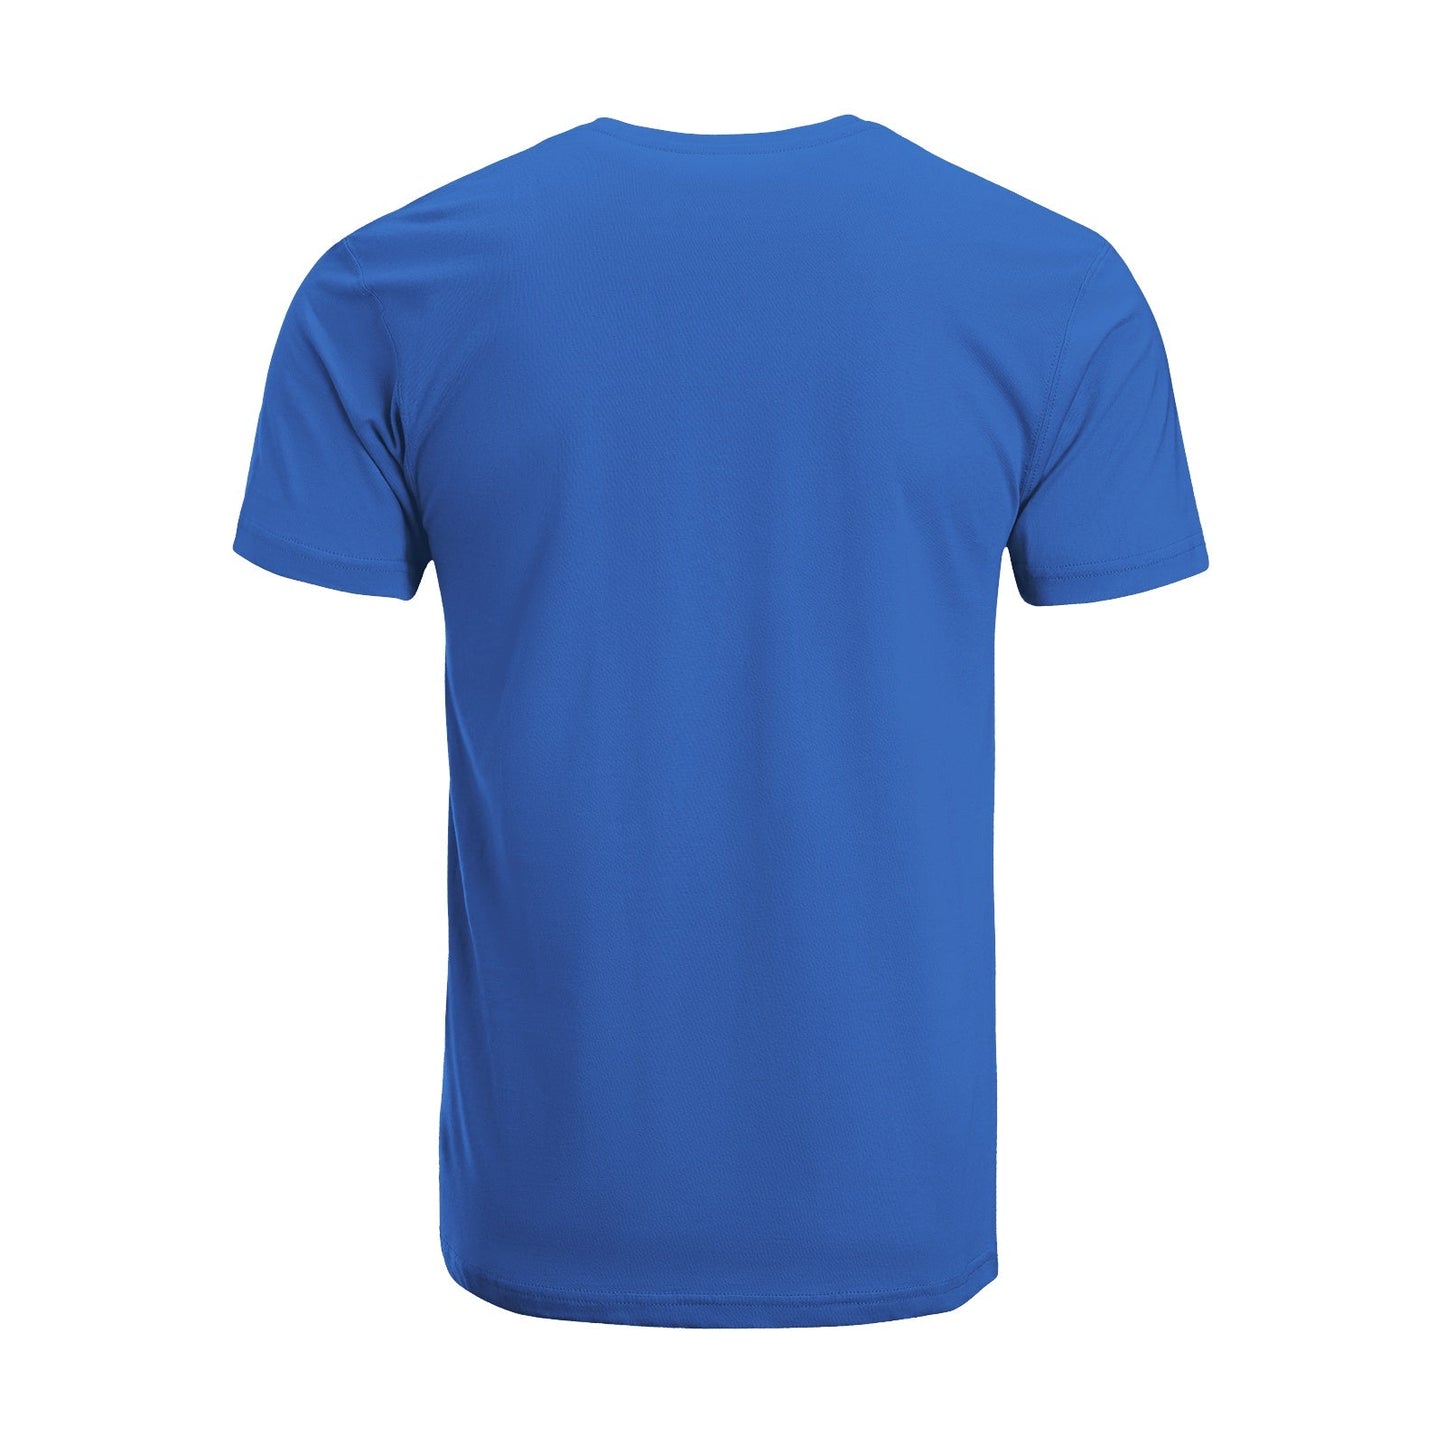 Unisex Short Sleeve Crew Neck Cotton Jersey T-Shirt CAT 41 - Tara-Outfits.com